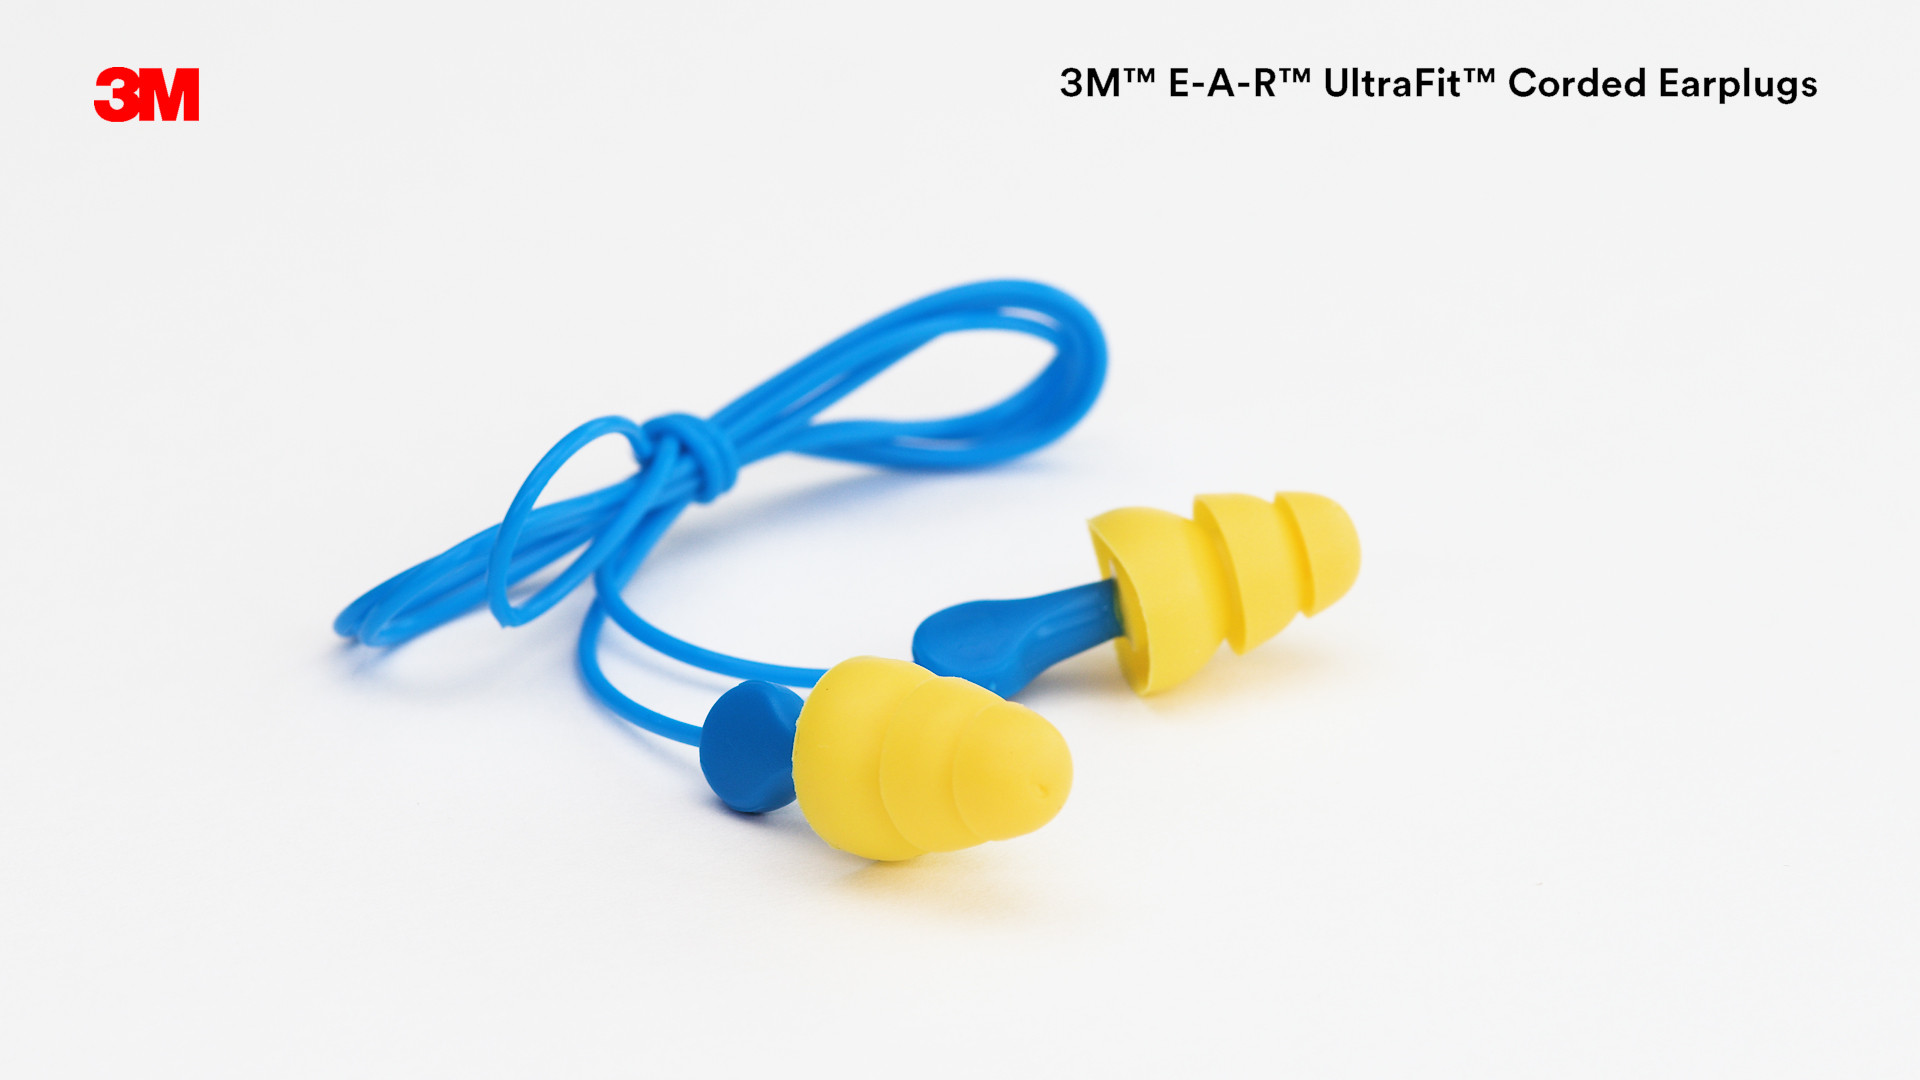 3M™ PELTOR™ Probed Electronic Earplug 393-2032-50, UltraFit Sm, 50 Pair/Case